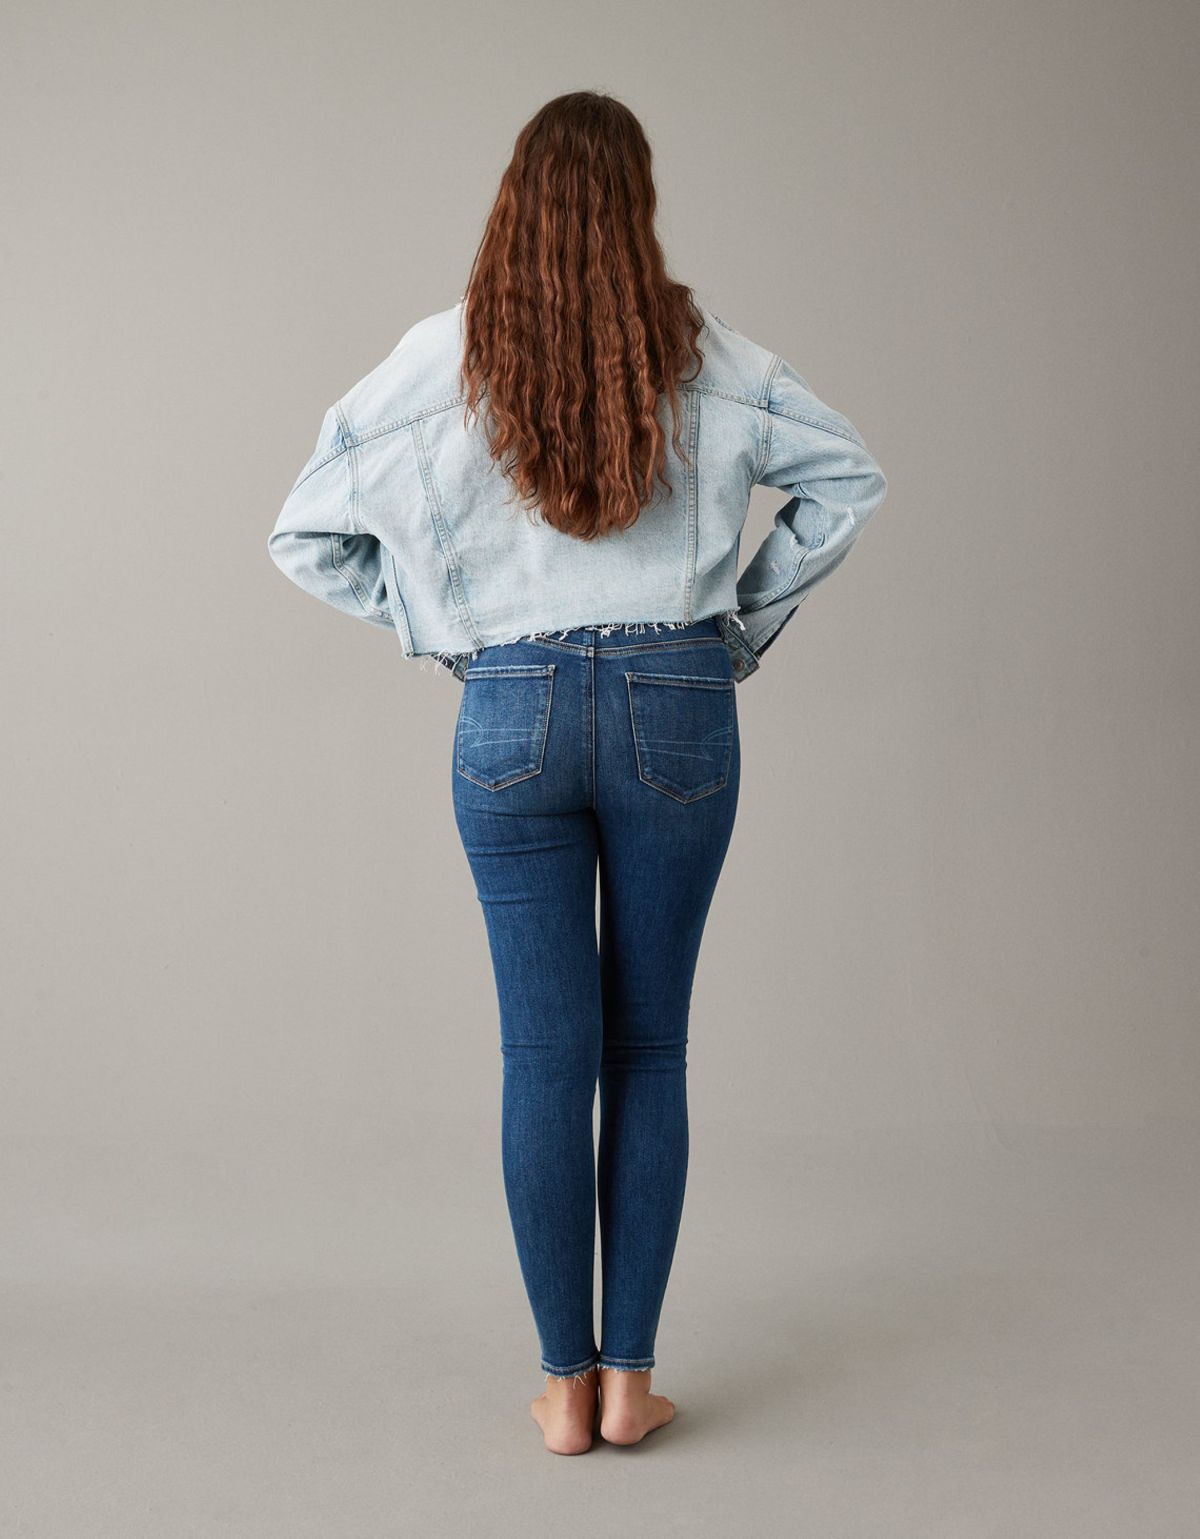  מכנסי ג'ינס SUPER HIGH RISE של AMERICAN EAGLE